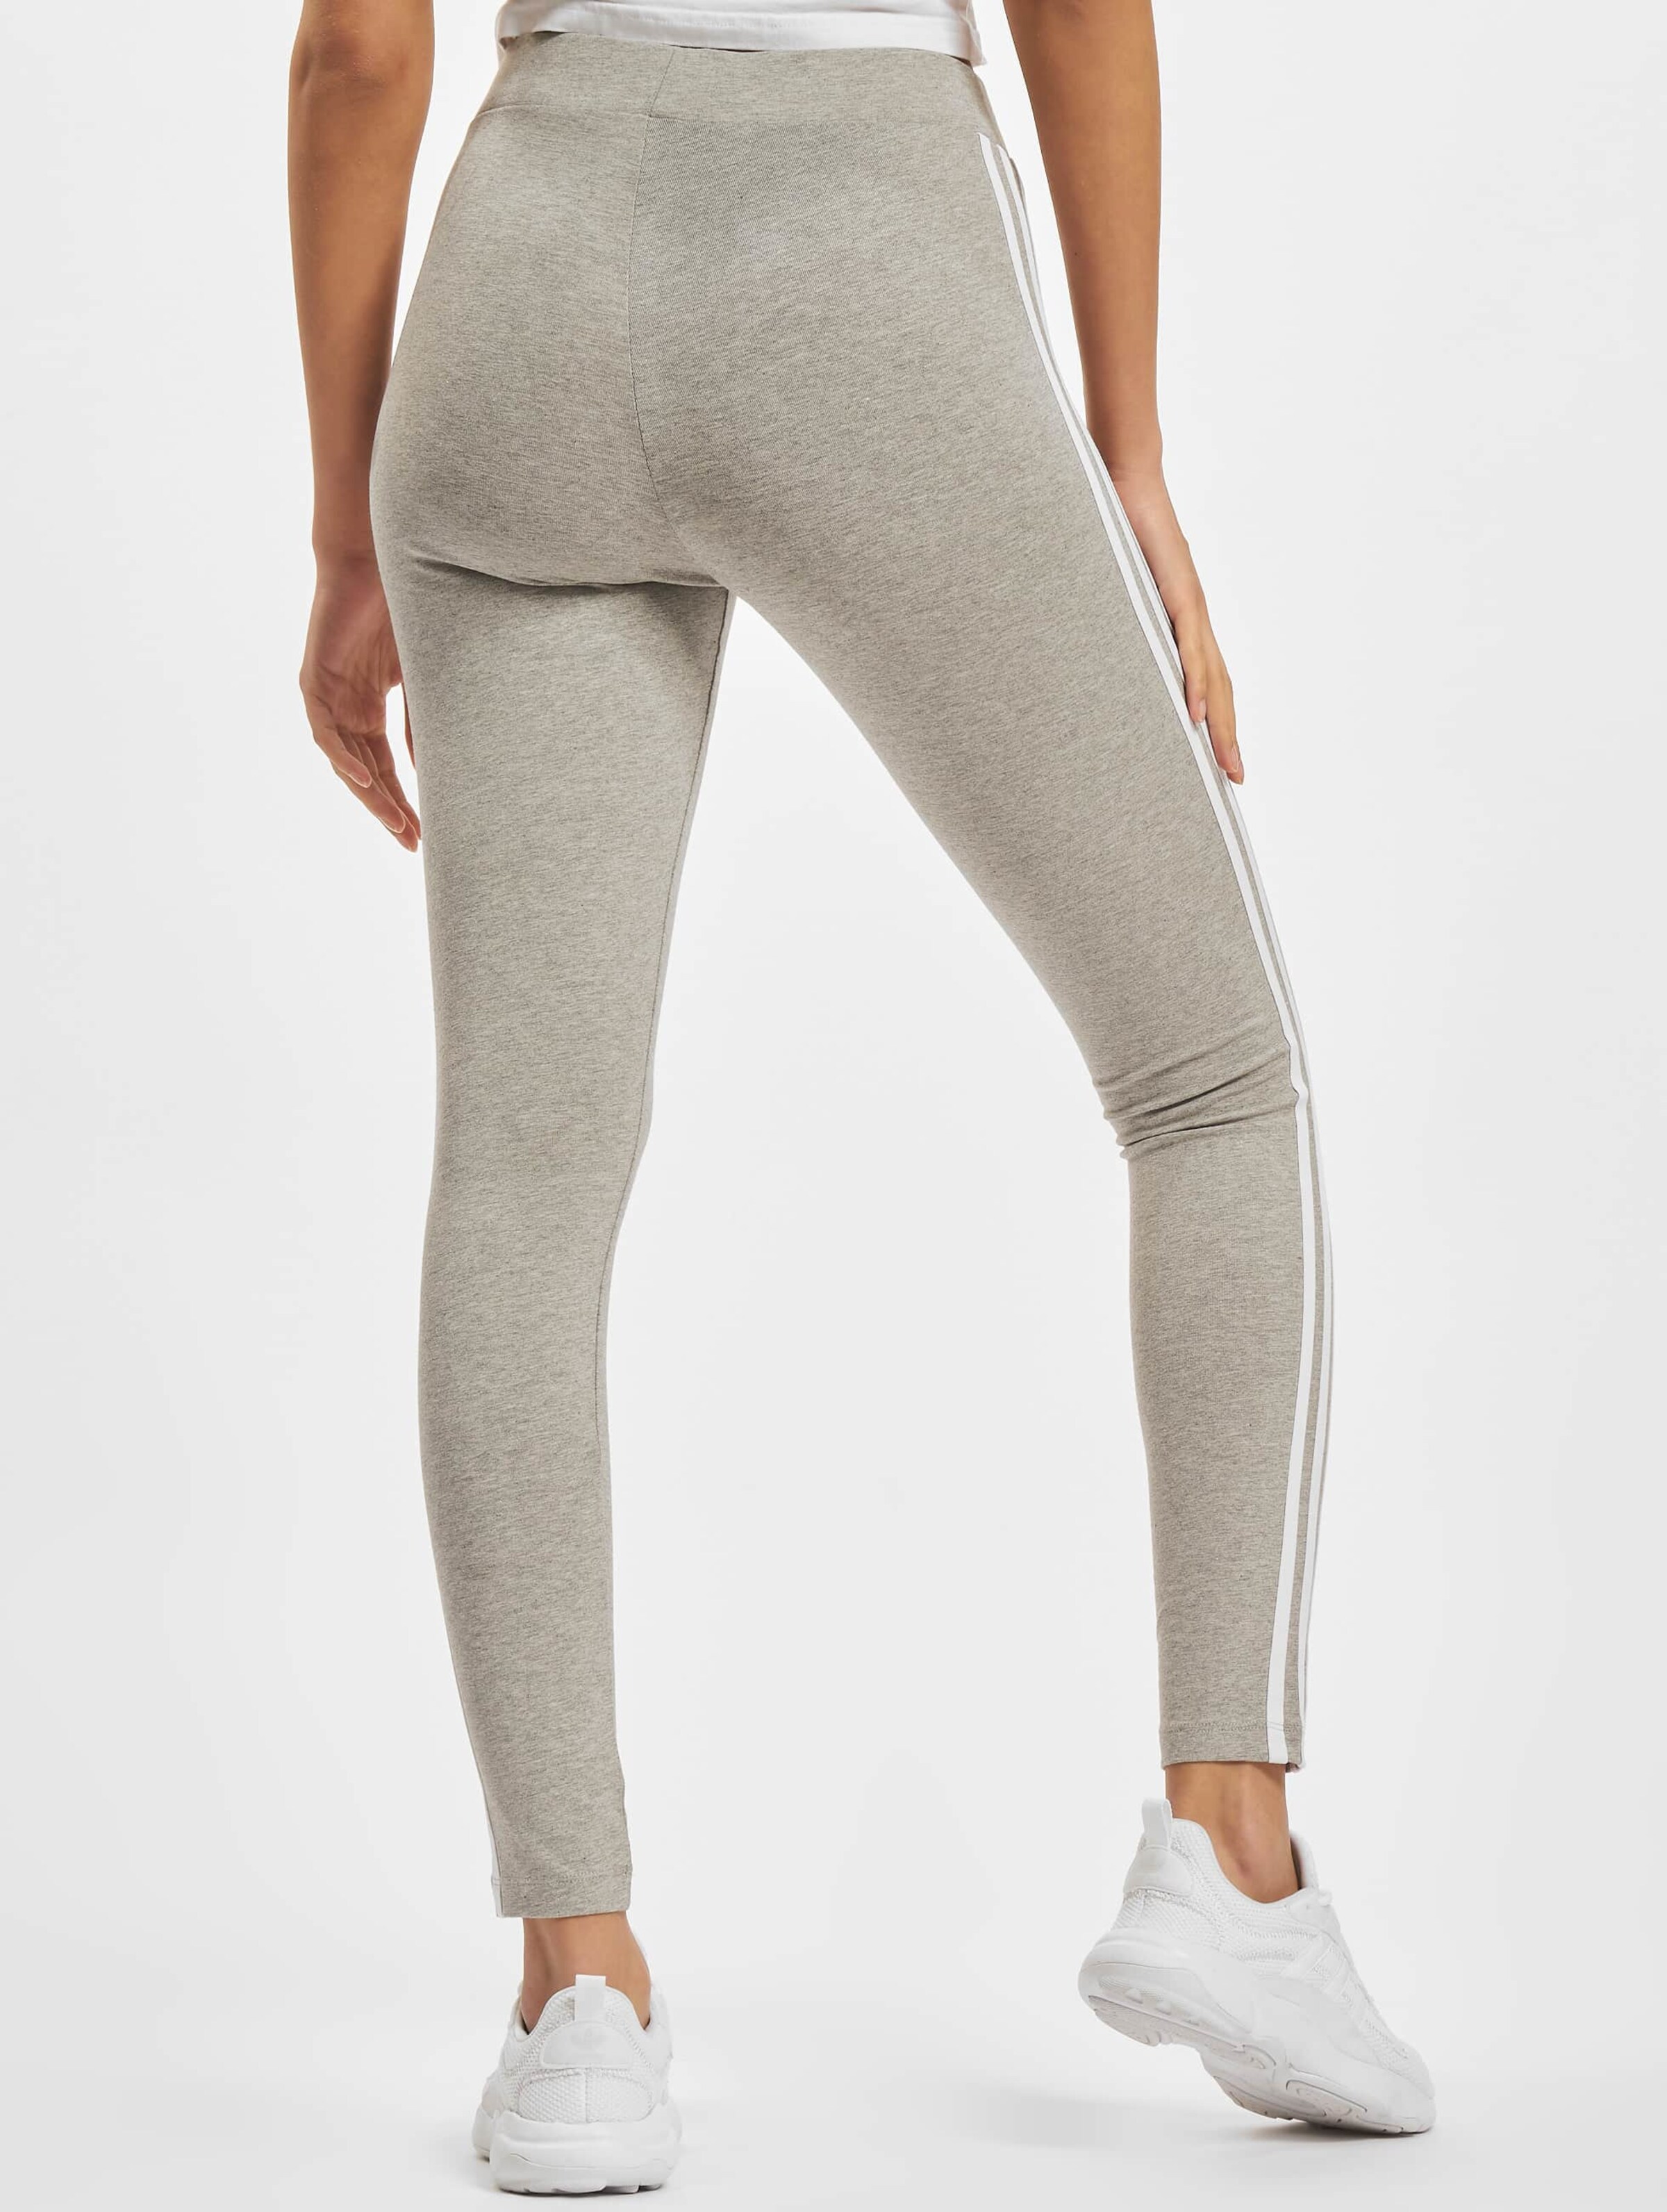 Adidas Aeroready Womens Medium Athletic 7/8 Leggings Dark Gray Yoga FN2758  | eBay